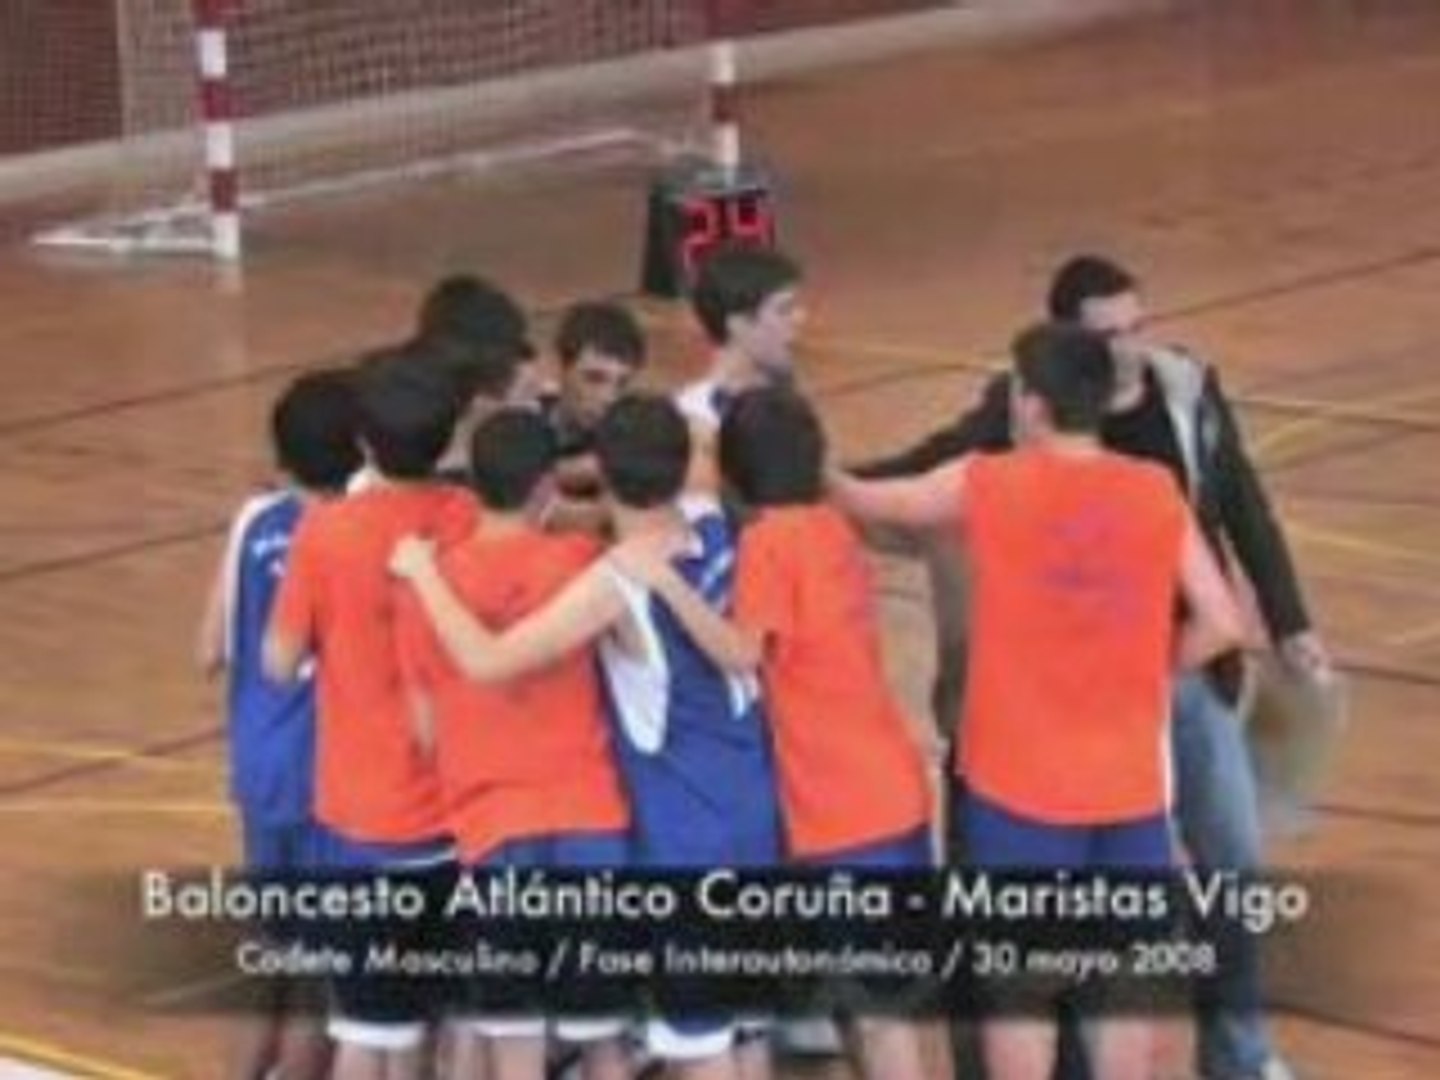 baloncesto Atlántico Coruña-Maristas Vigo - Vídeo Dailymotion